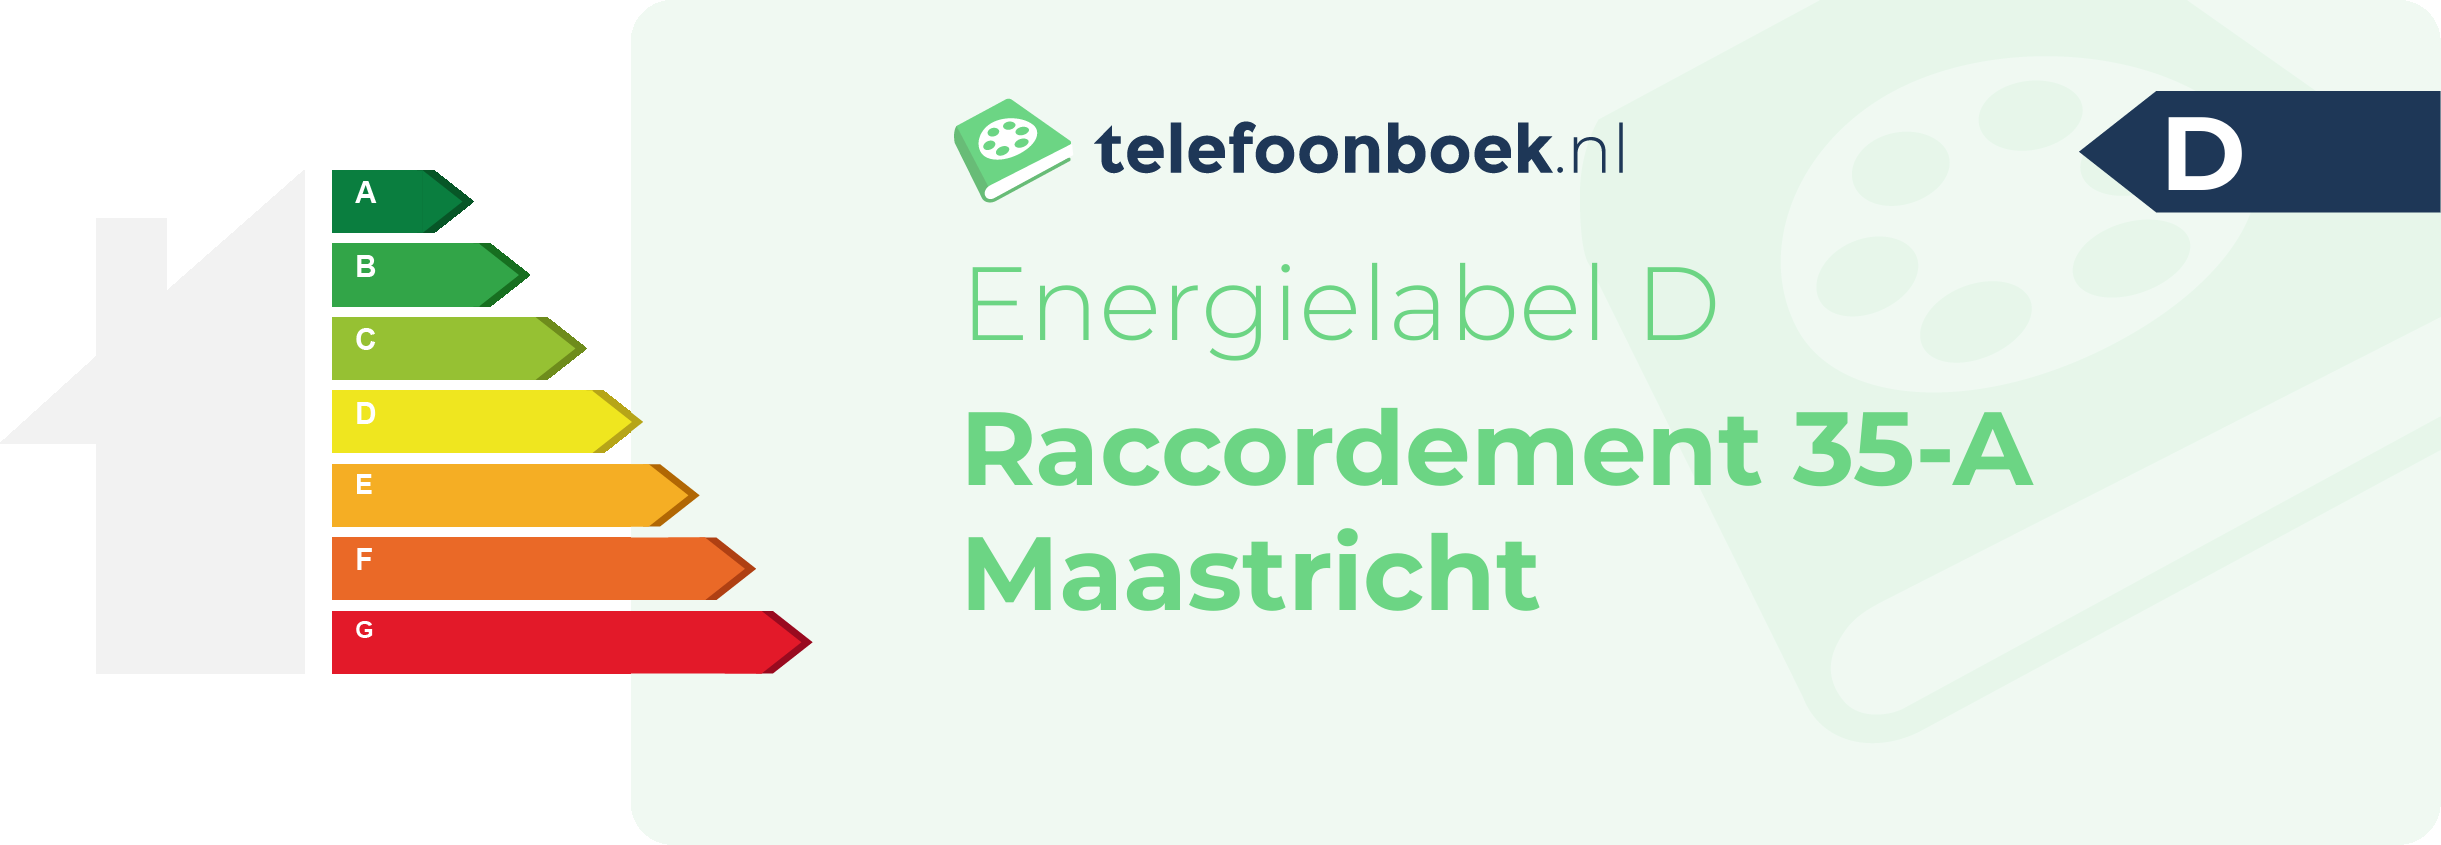 Energielabel Raccordement 35-A Maastricht